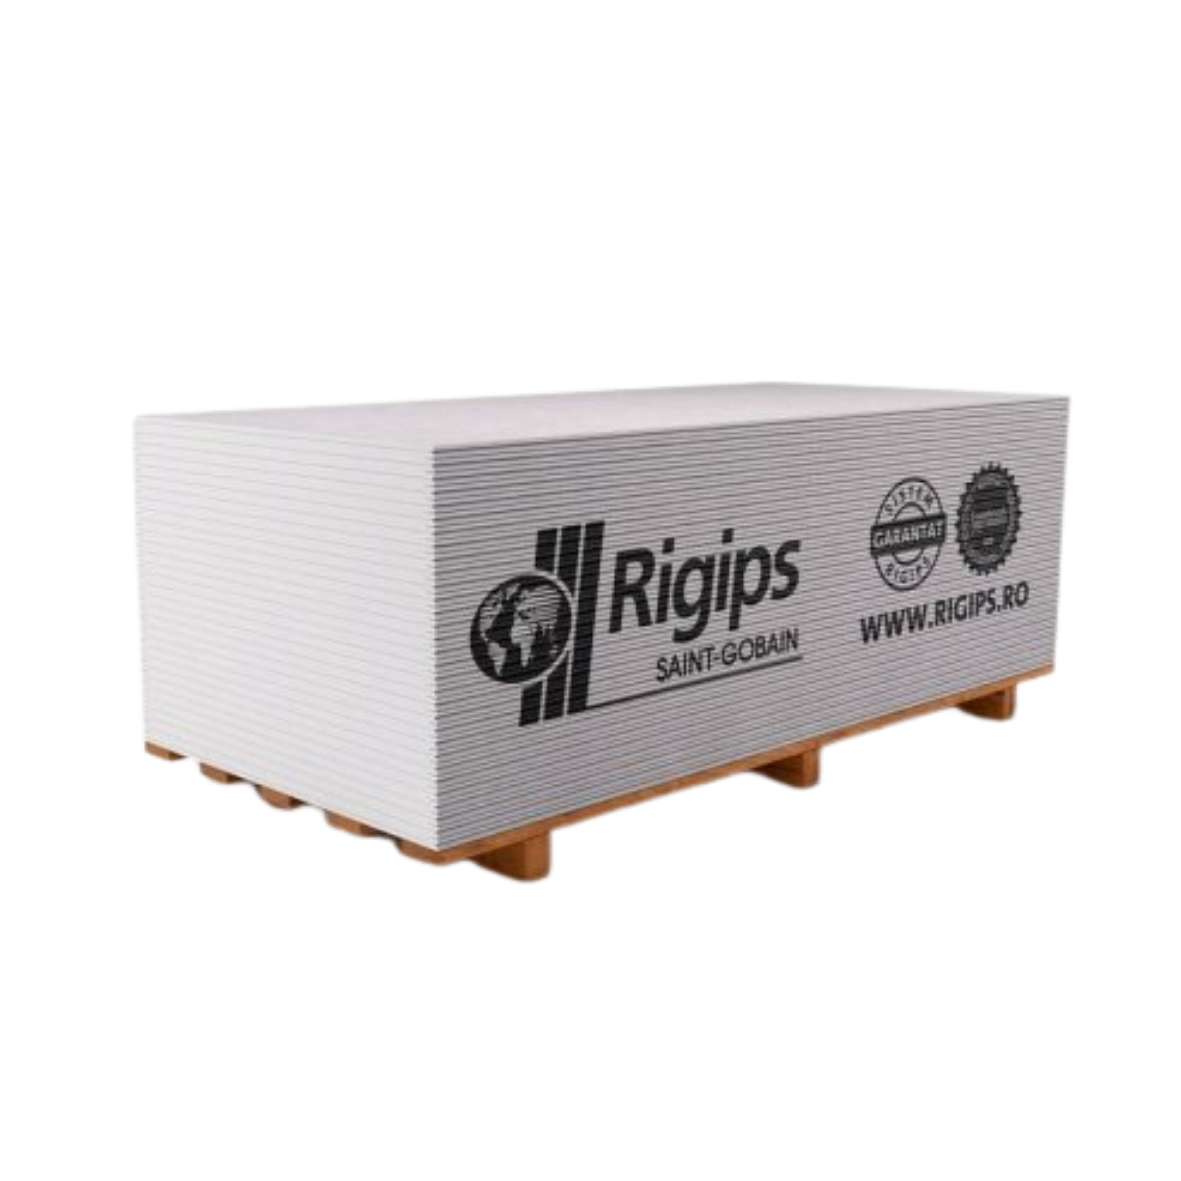 Common drywall tiles - Rigips RB 12.5 x 1200 x 2000 mm, https:maxbau.ro